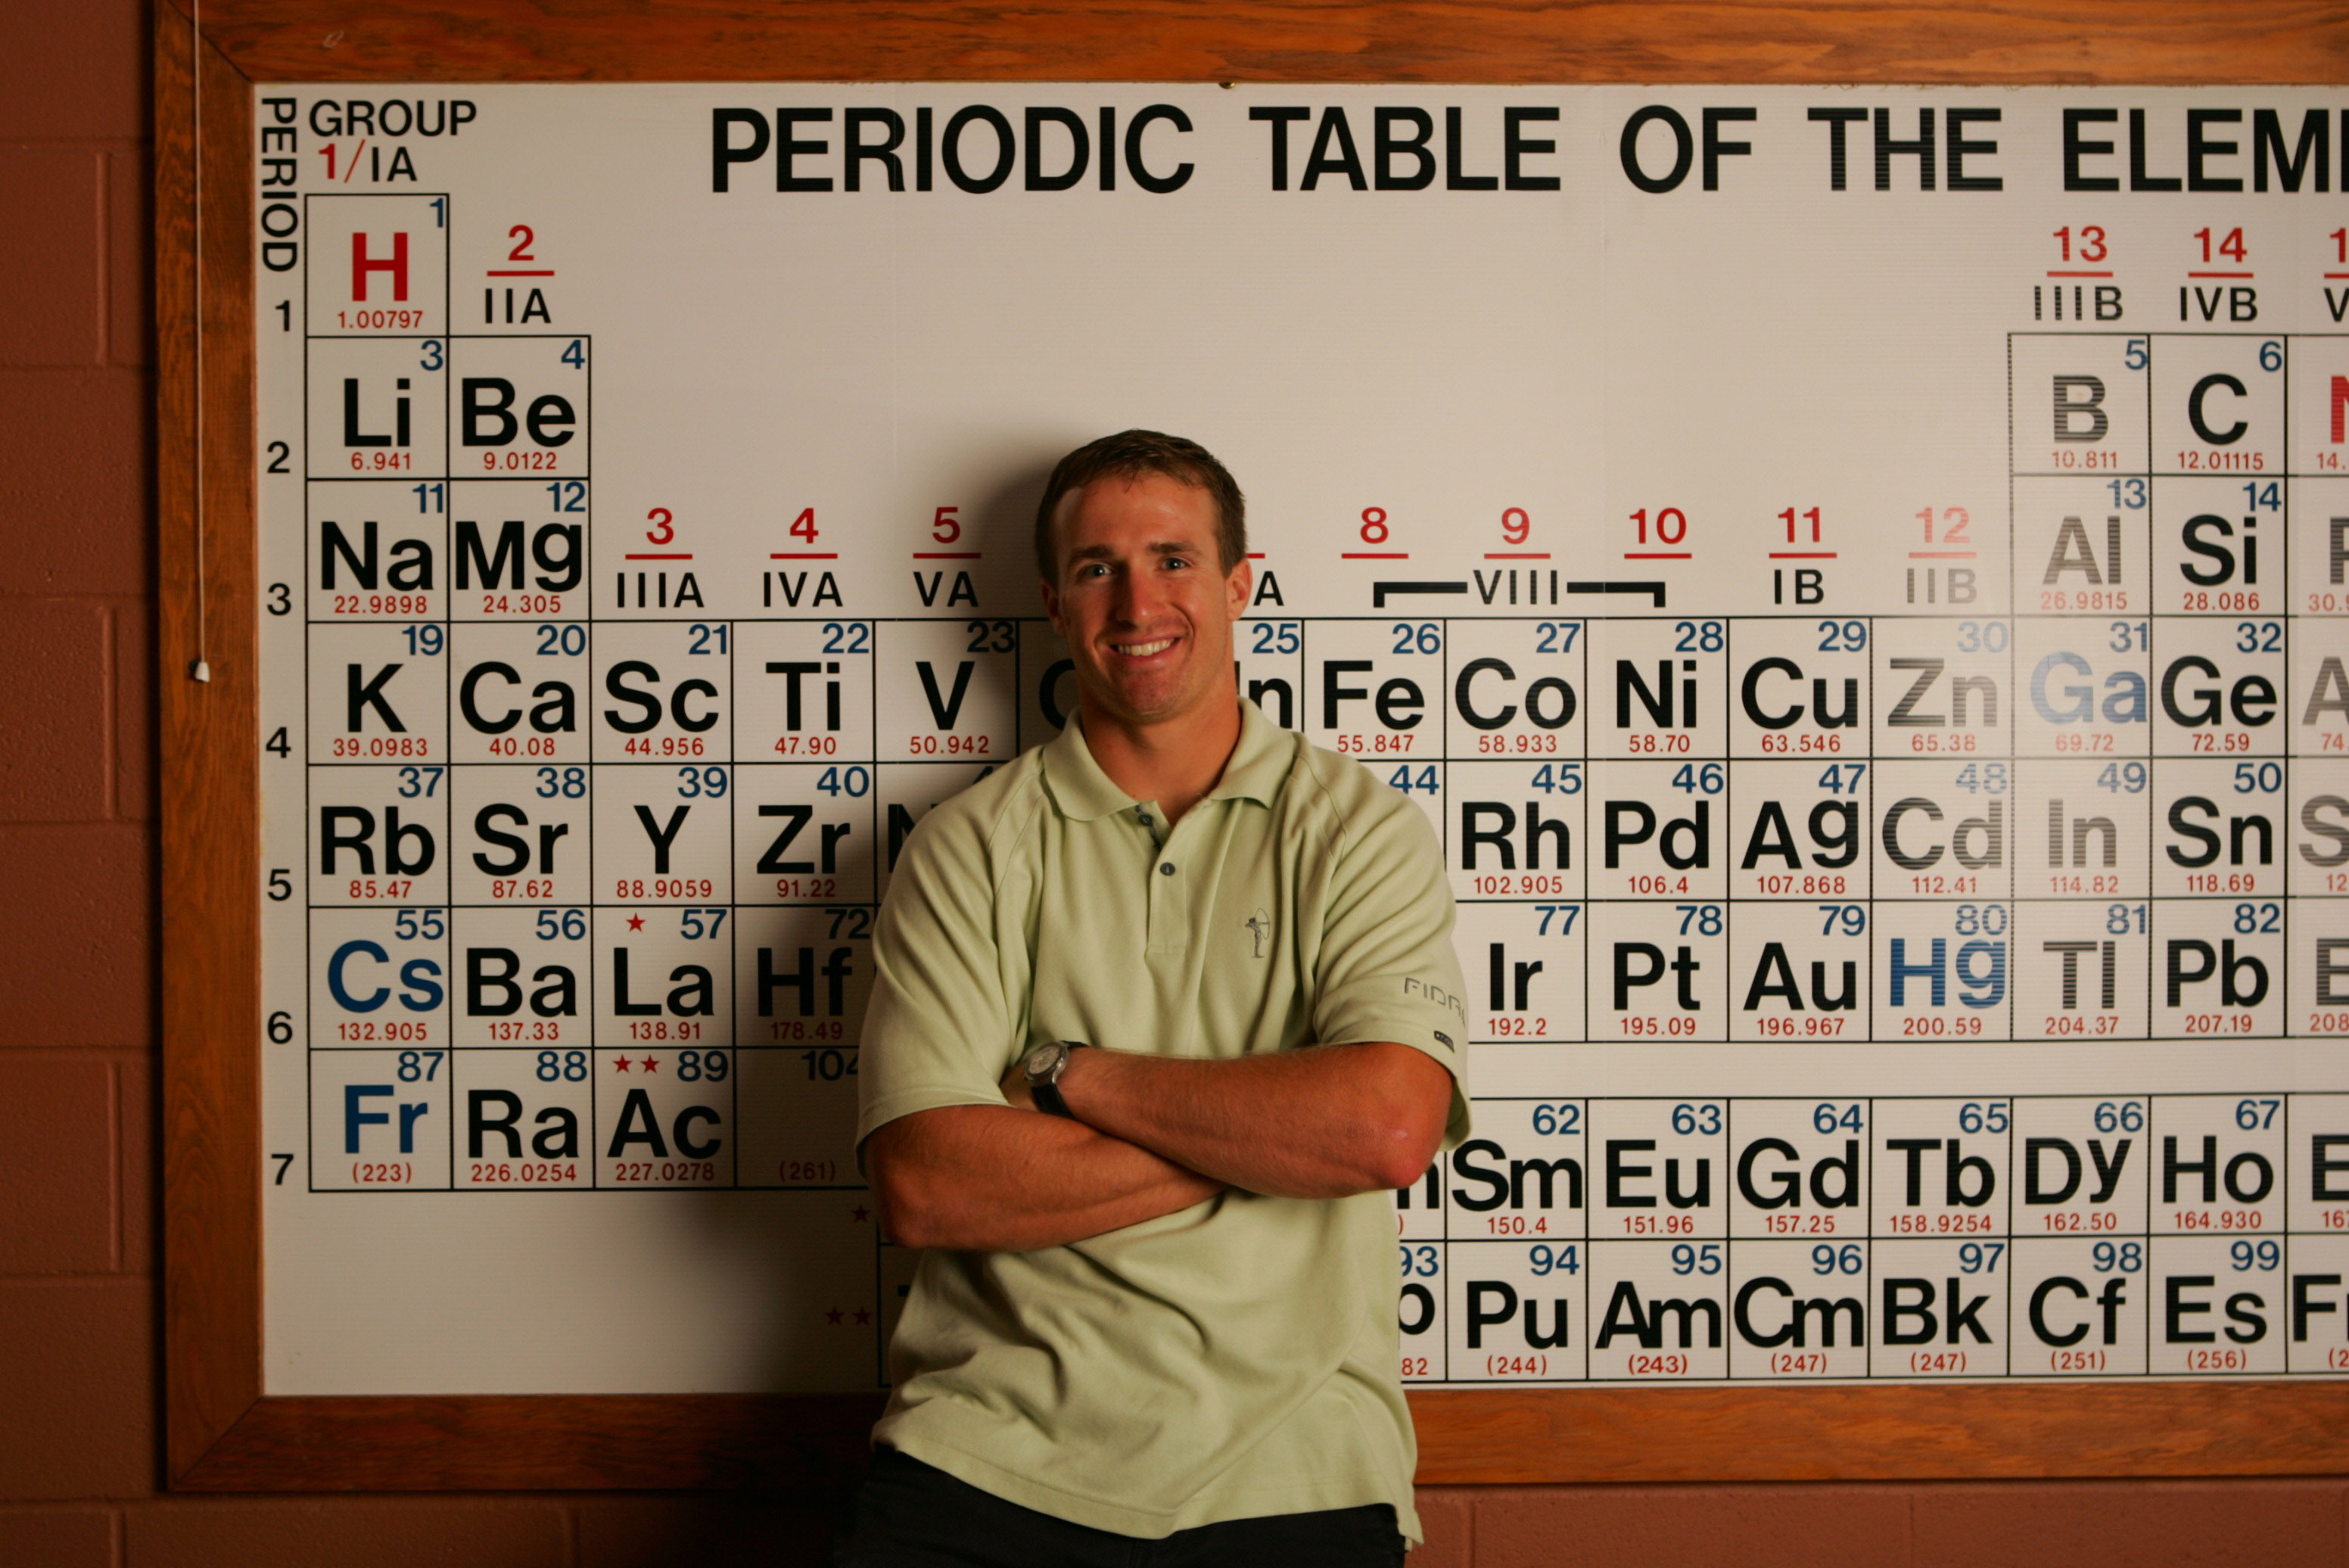 drew-brees-periodic-table-of-elements.jpg